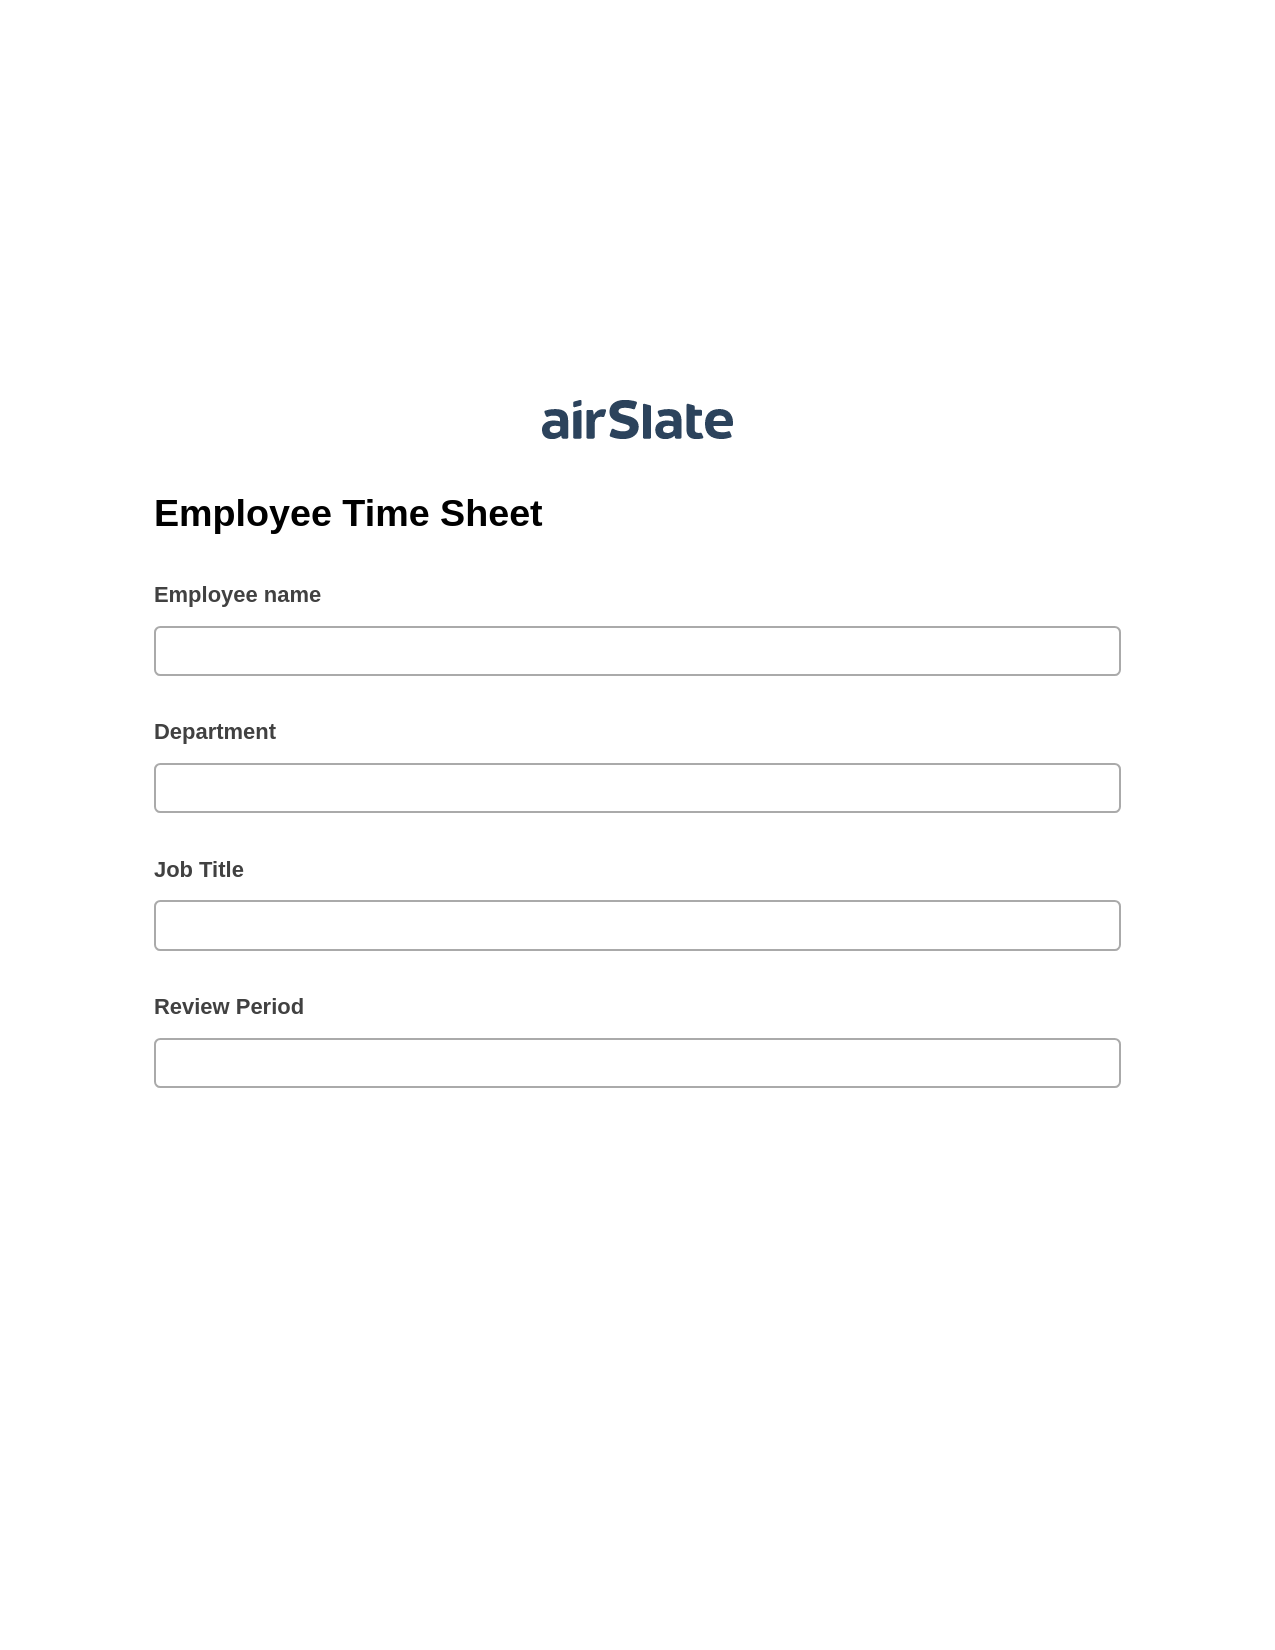 Employee Time Sheet Pre-fill from Smartsheet Bot, Slack Notification Bot, Export to Excel 365 Bot